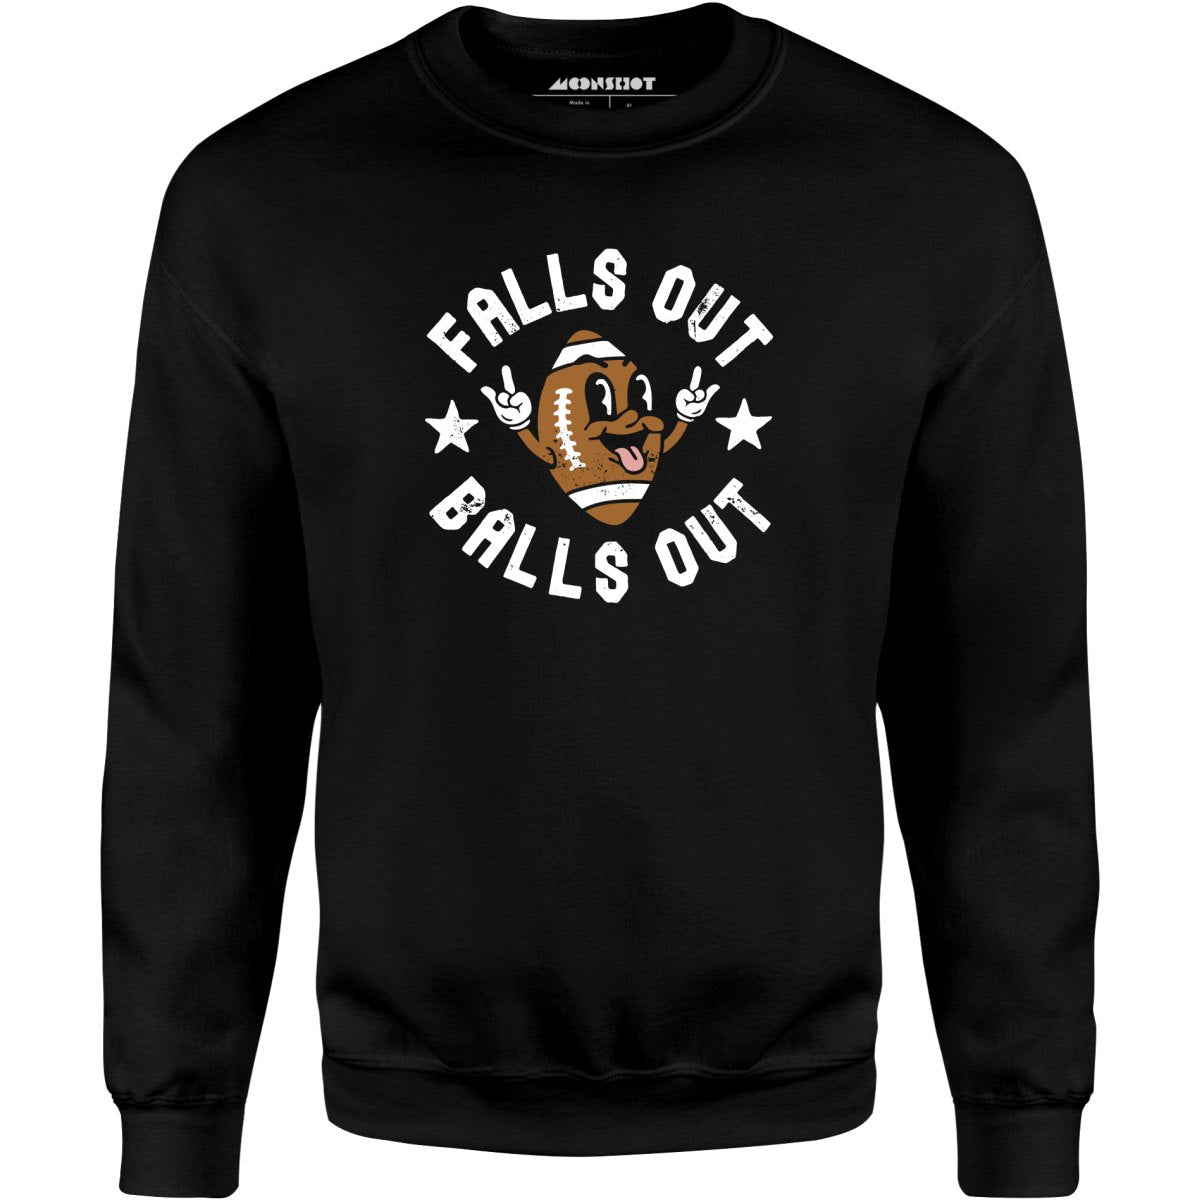 Falls Out Balls Out - Unisex Sweatshirt